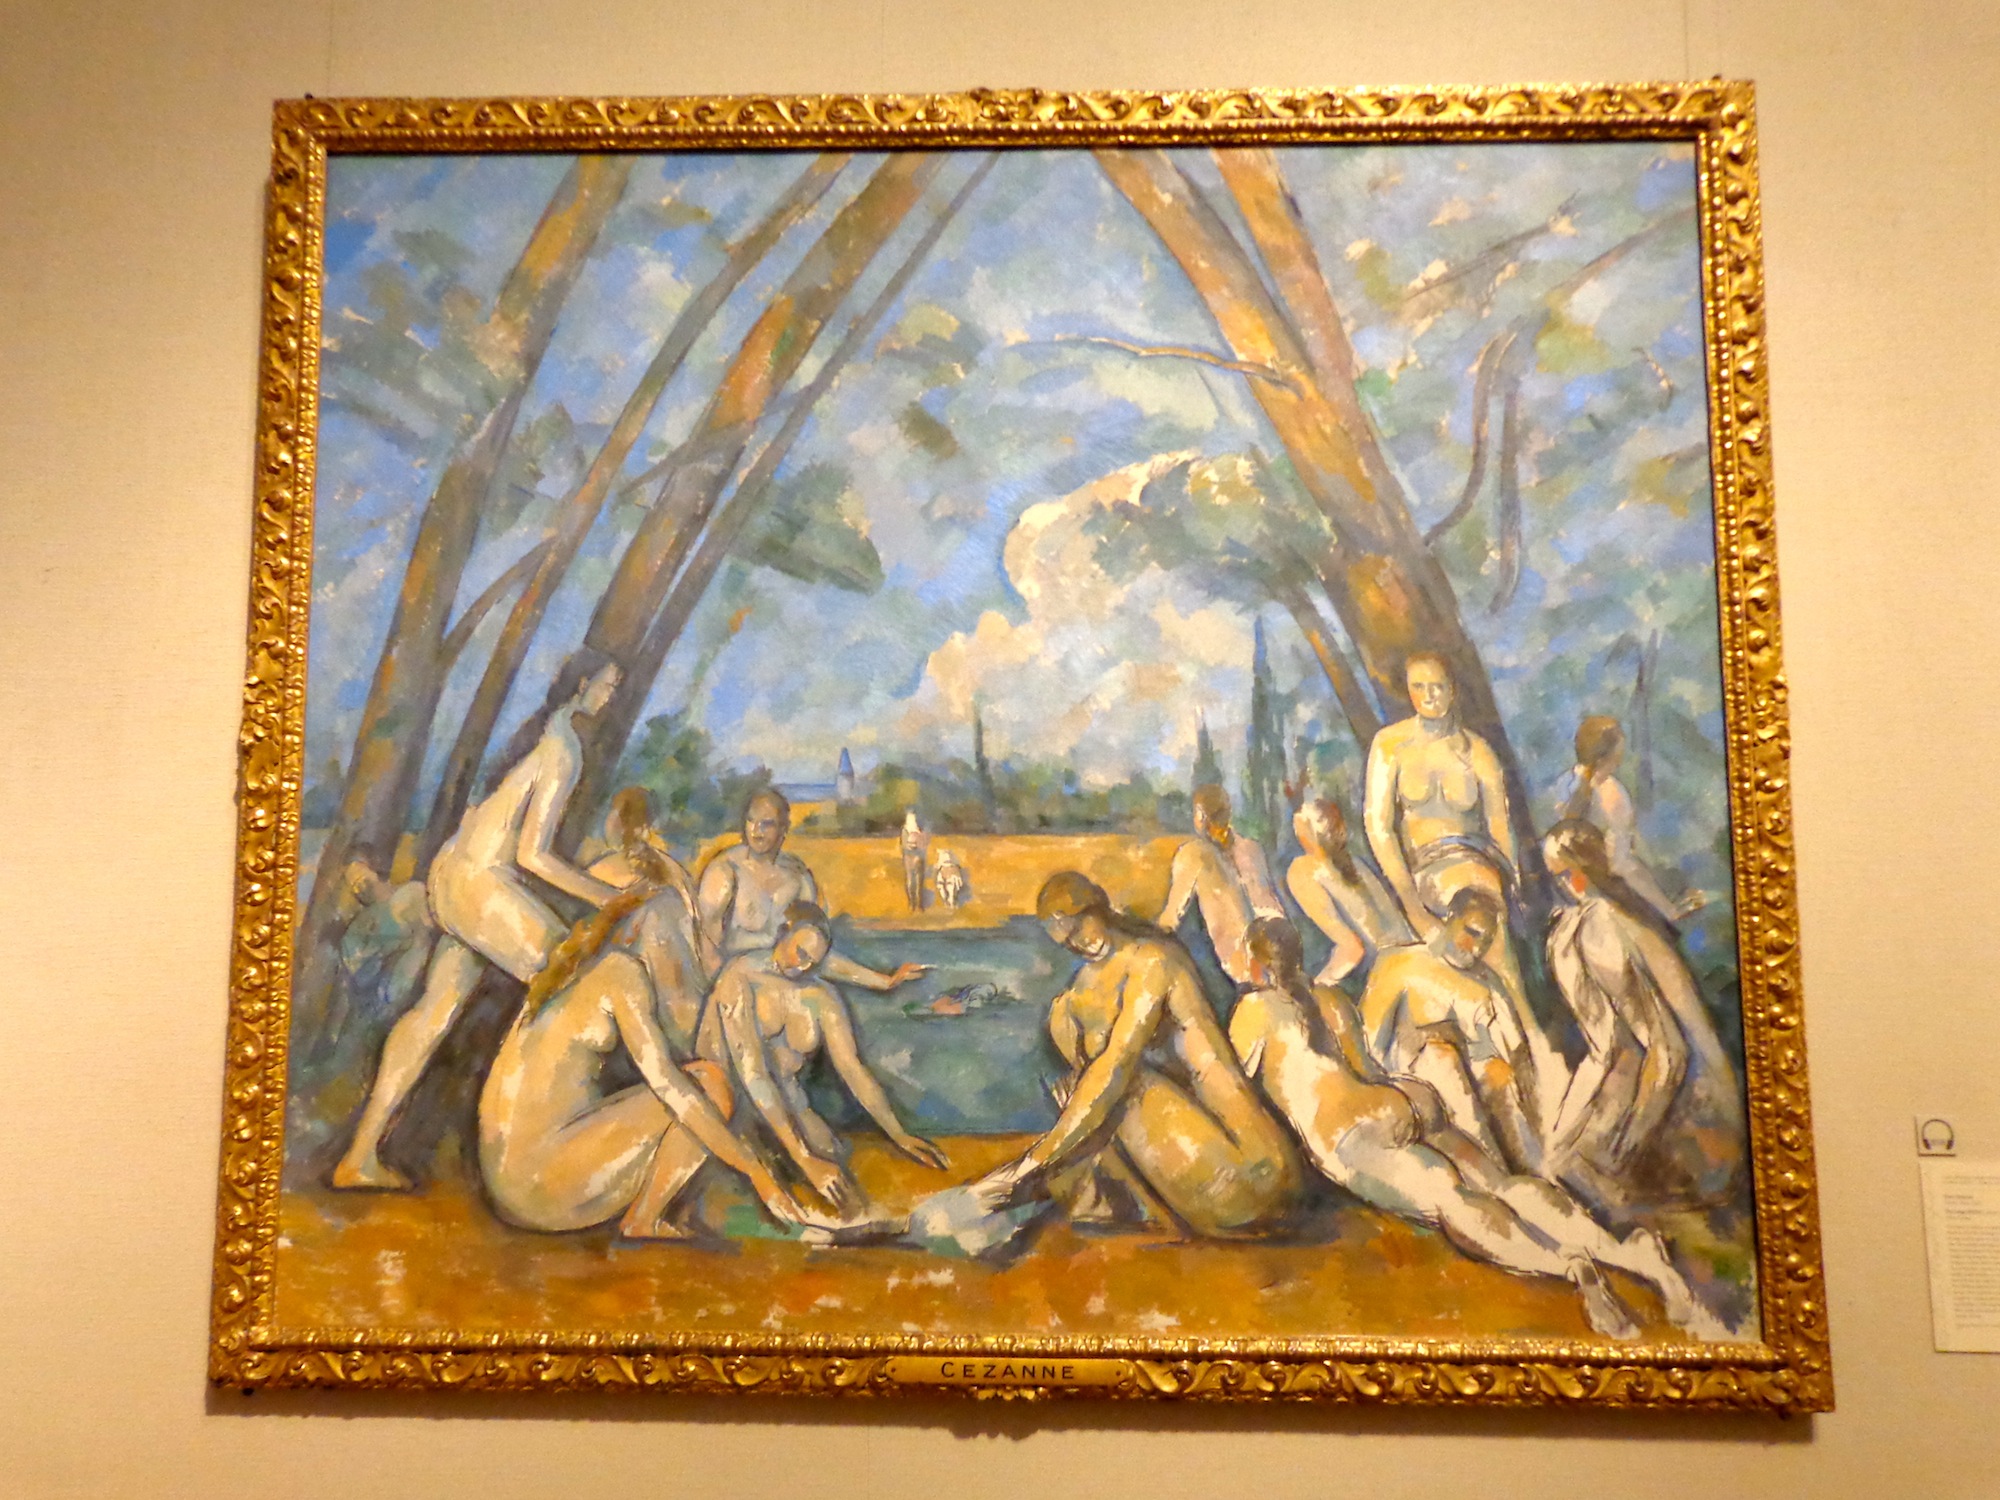 Paul Cezanne, "The Large Bathers," 1879-1906